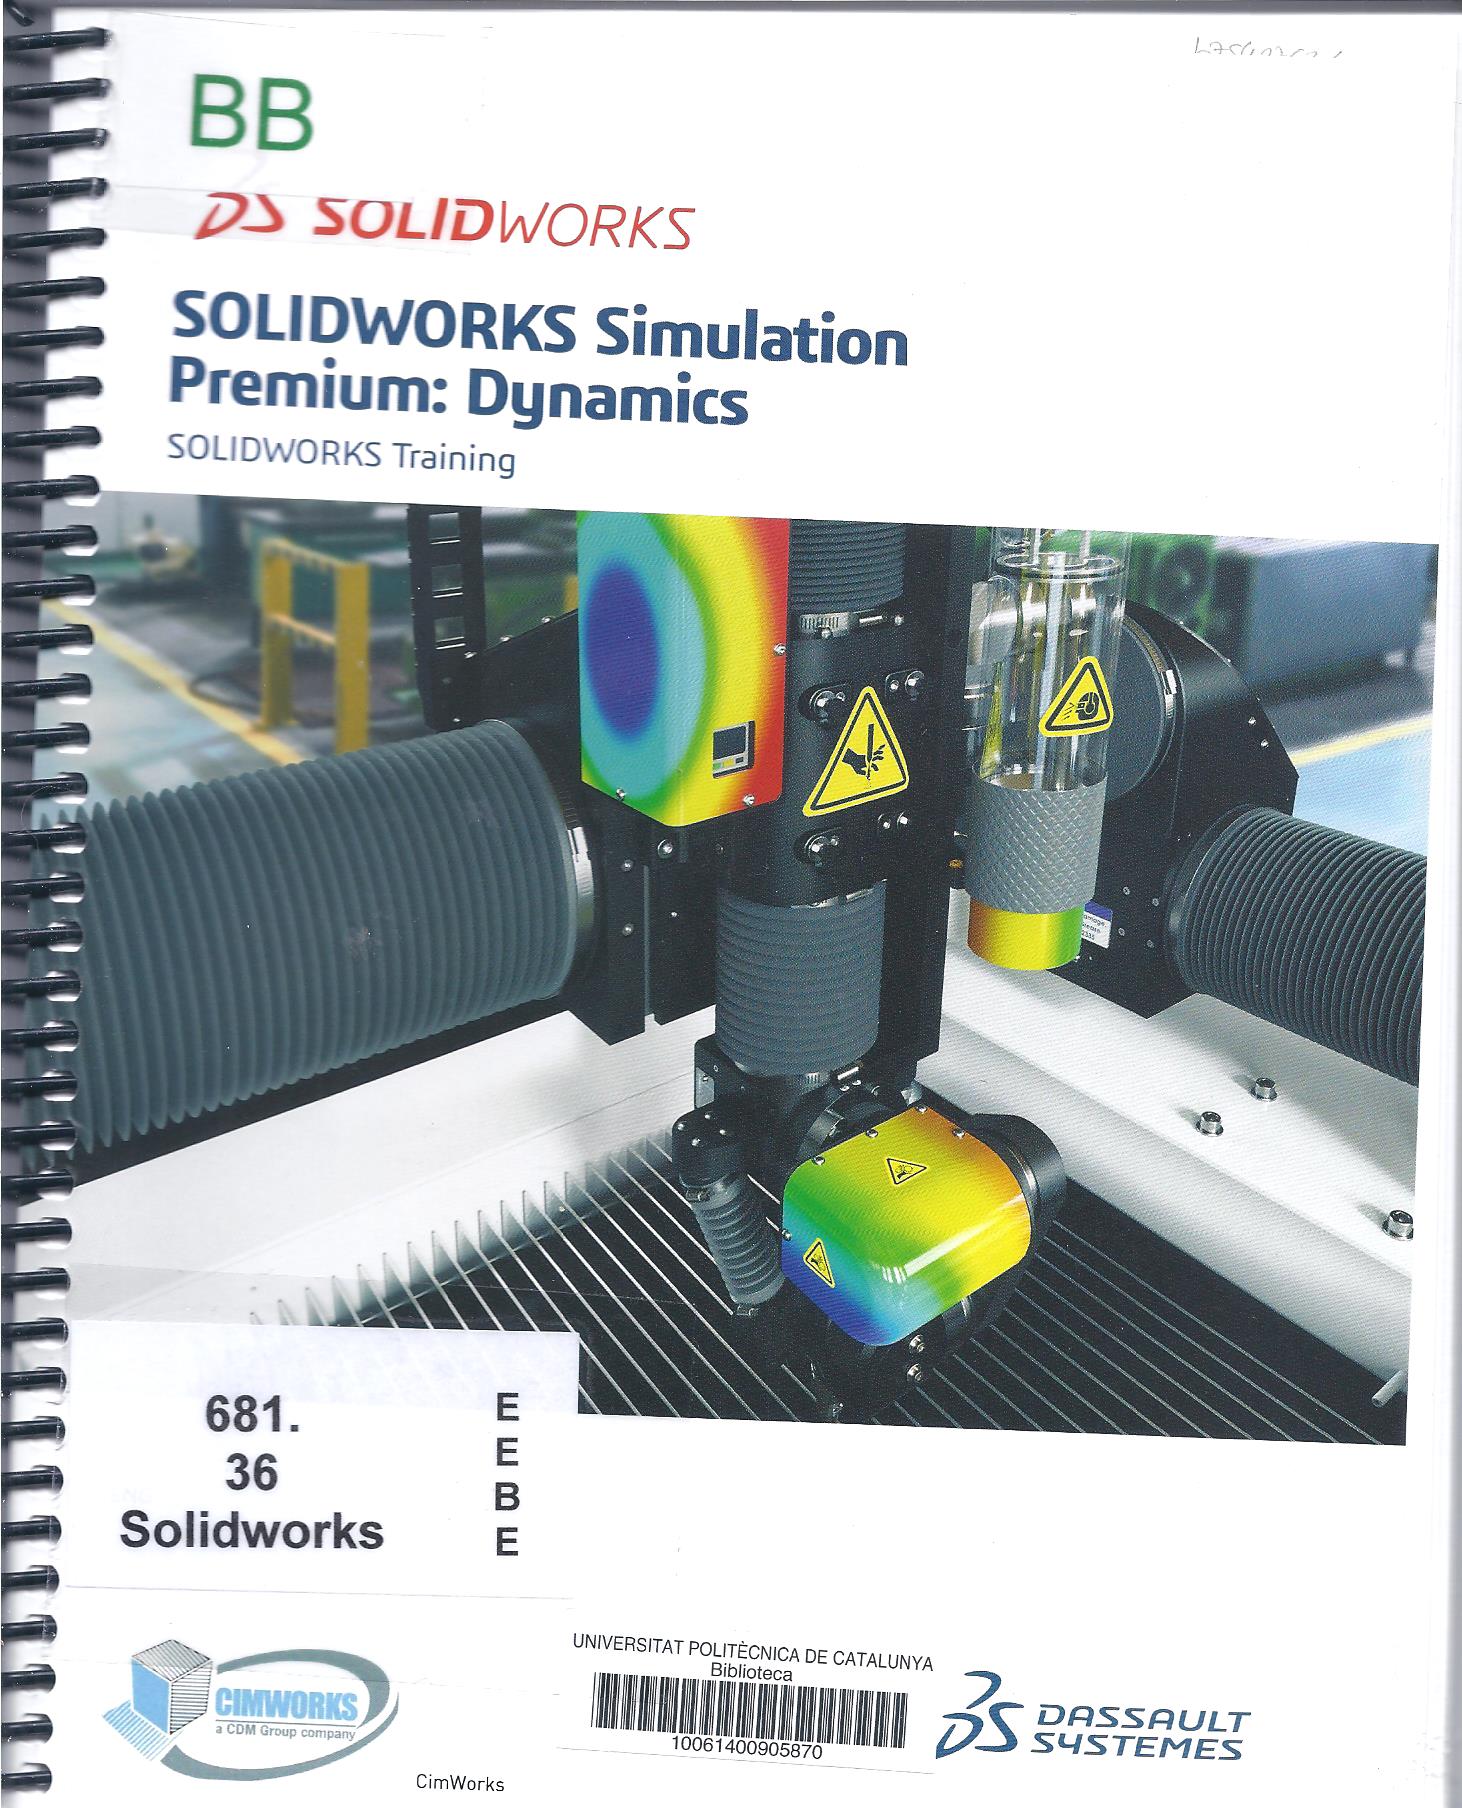 Solidworks simulation premium : Dynamics Solidworks